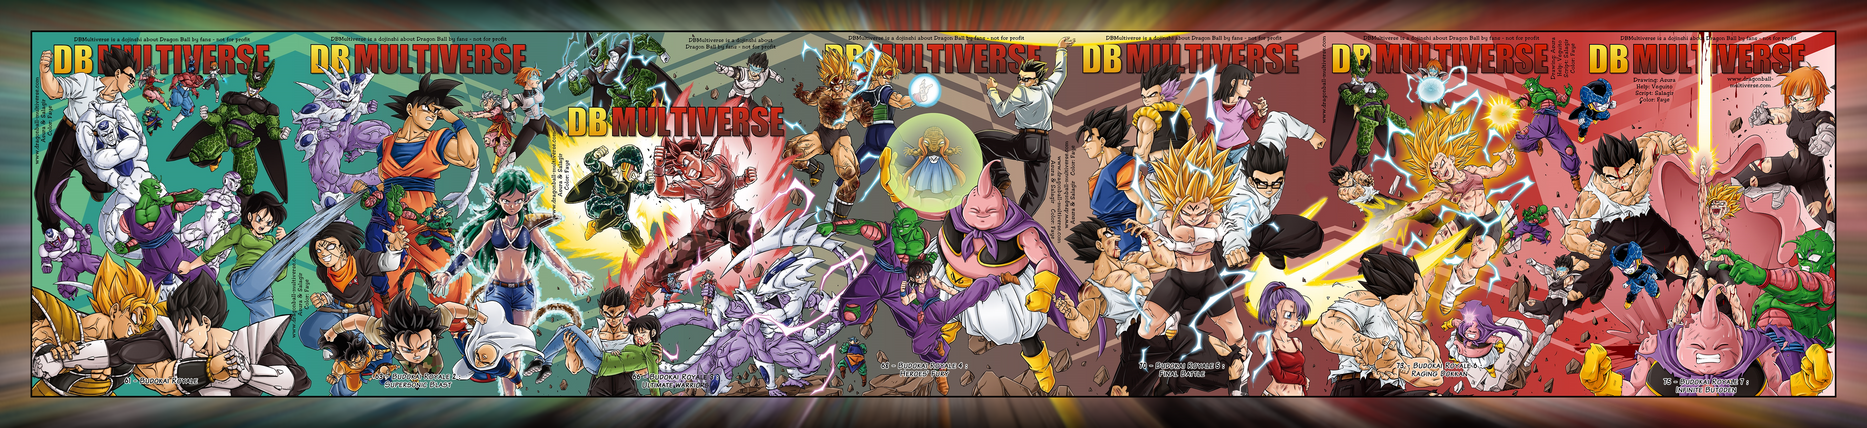 Oob Dragon Ball Multiverse by FinalBrams on DeviantArt